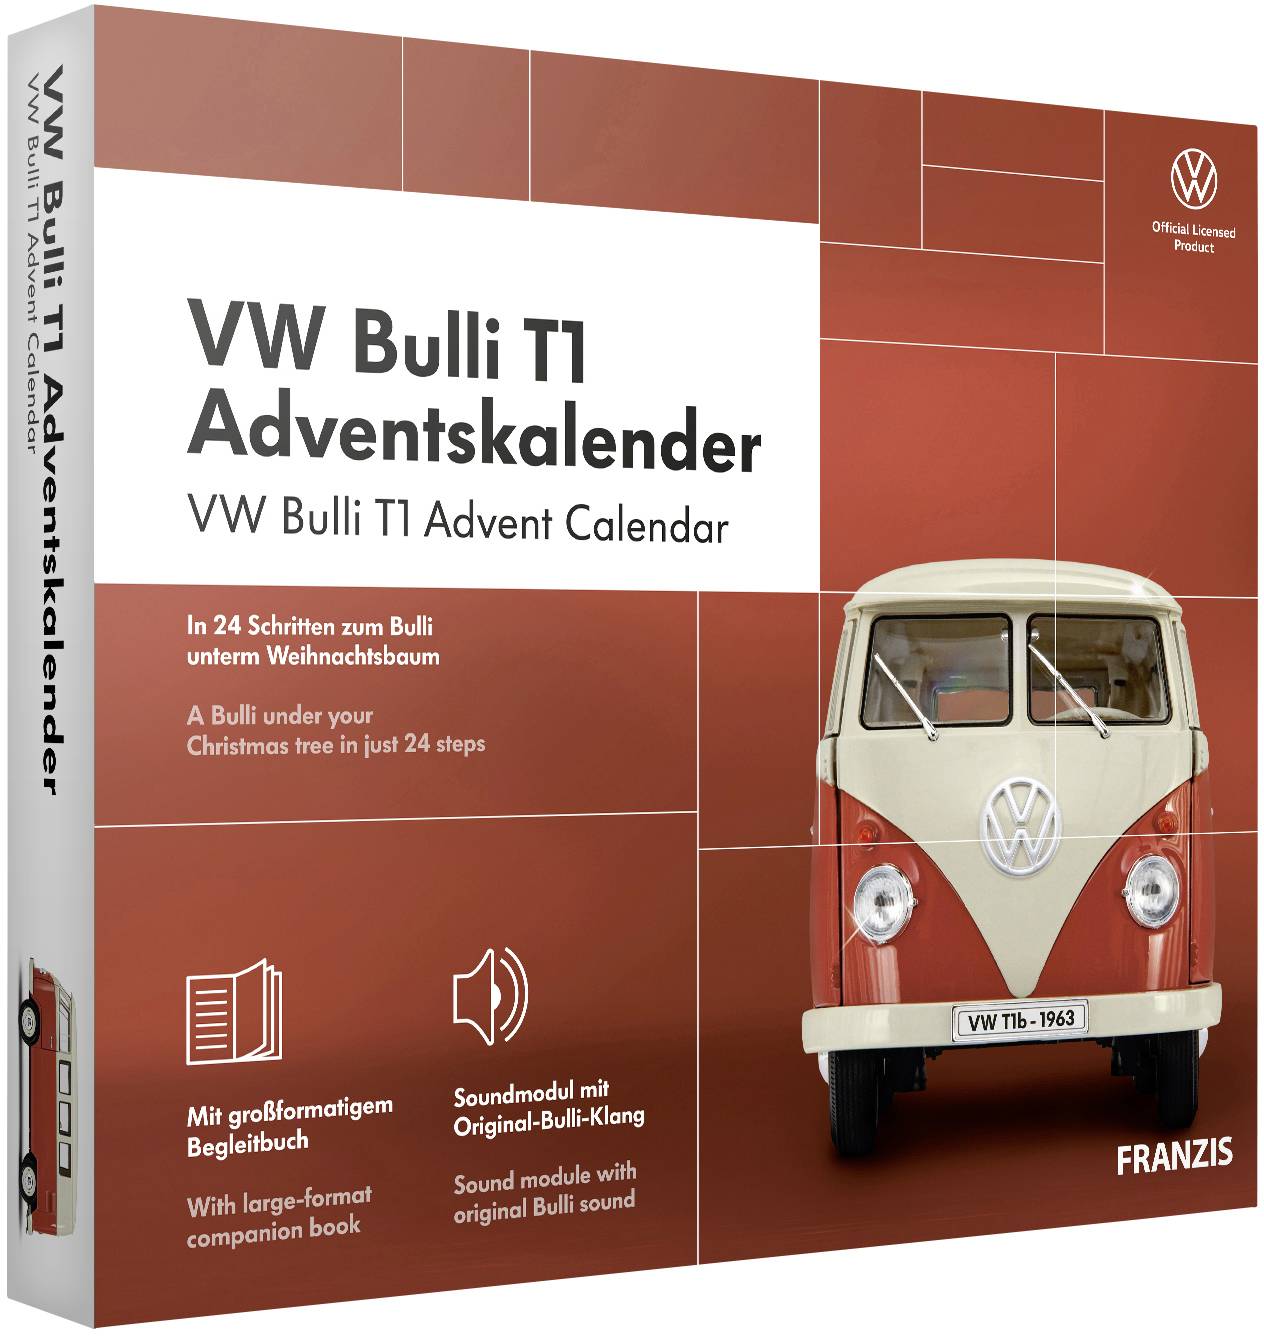 VW Bulli T1 Advent Calendar 14 years and over